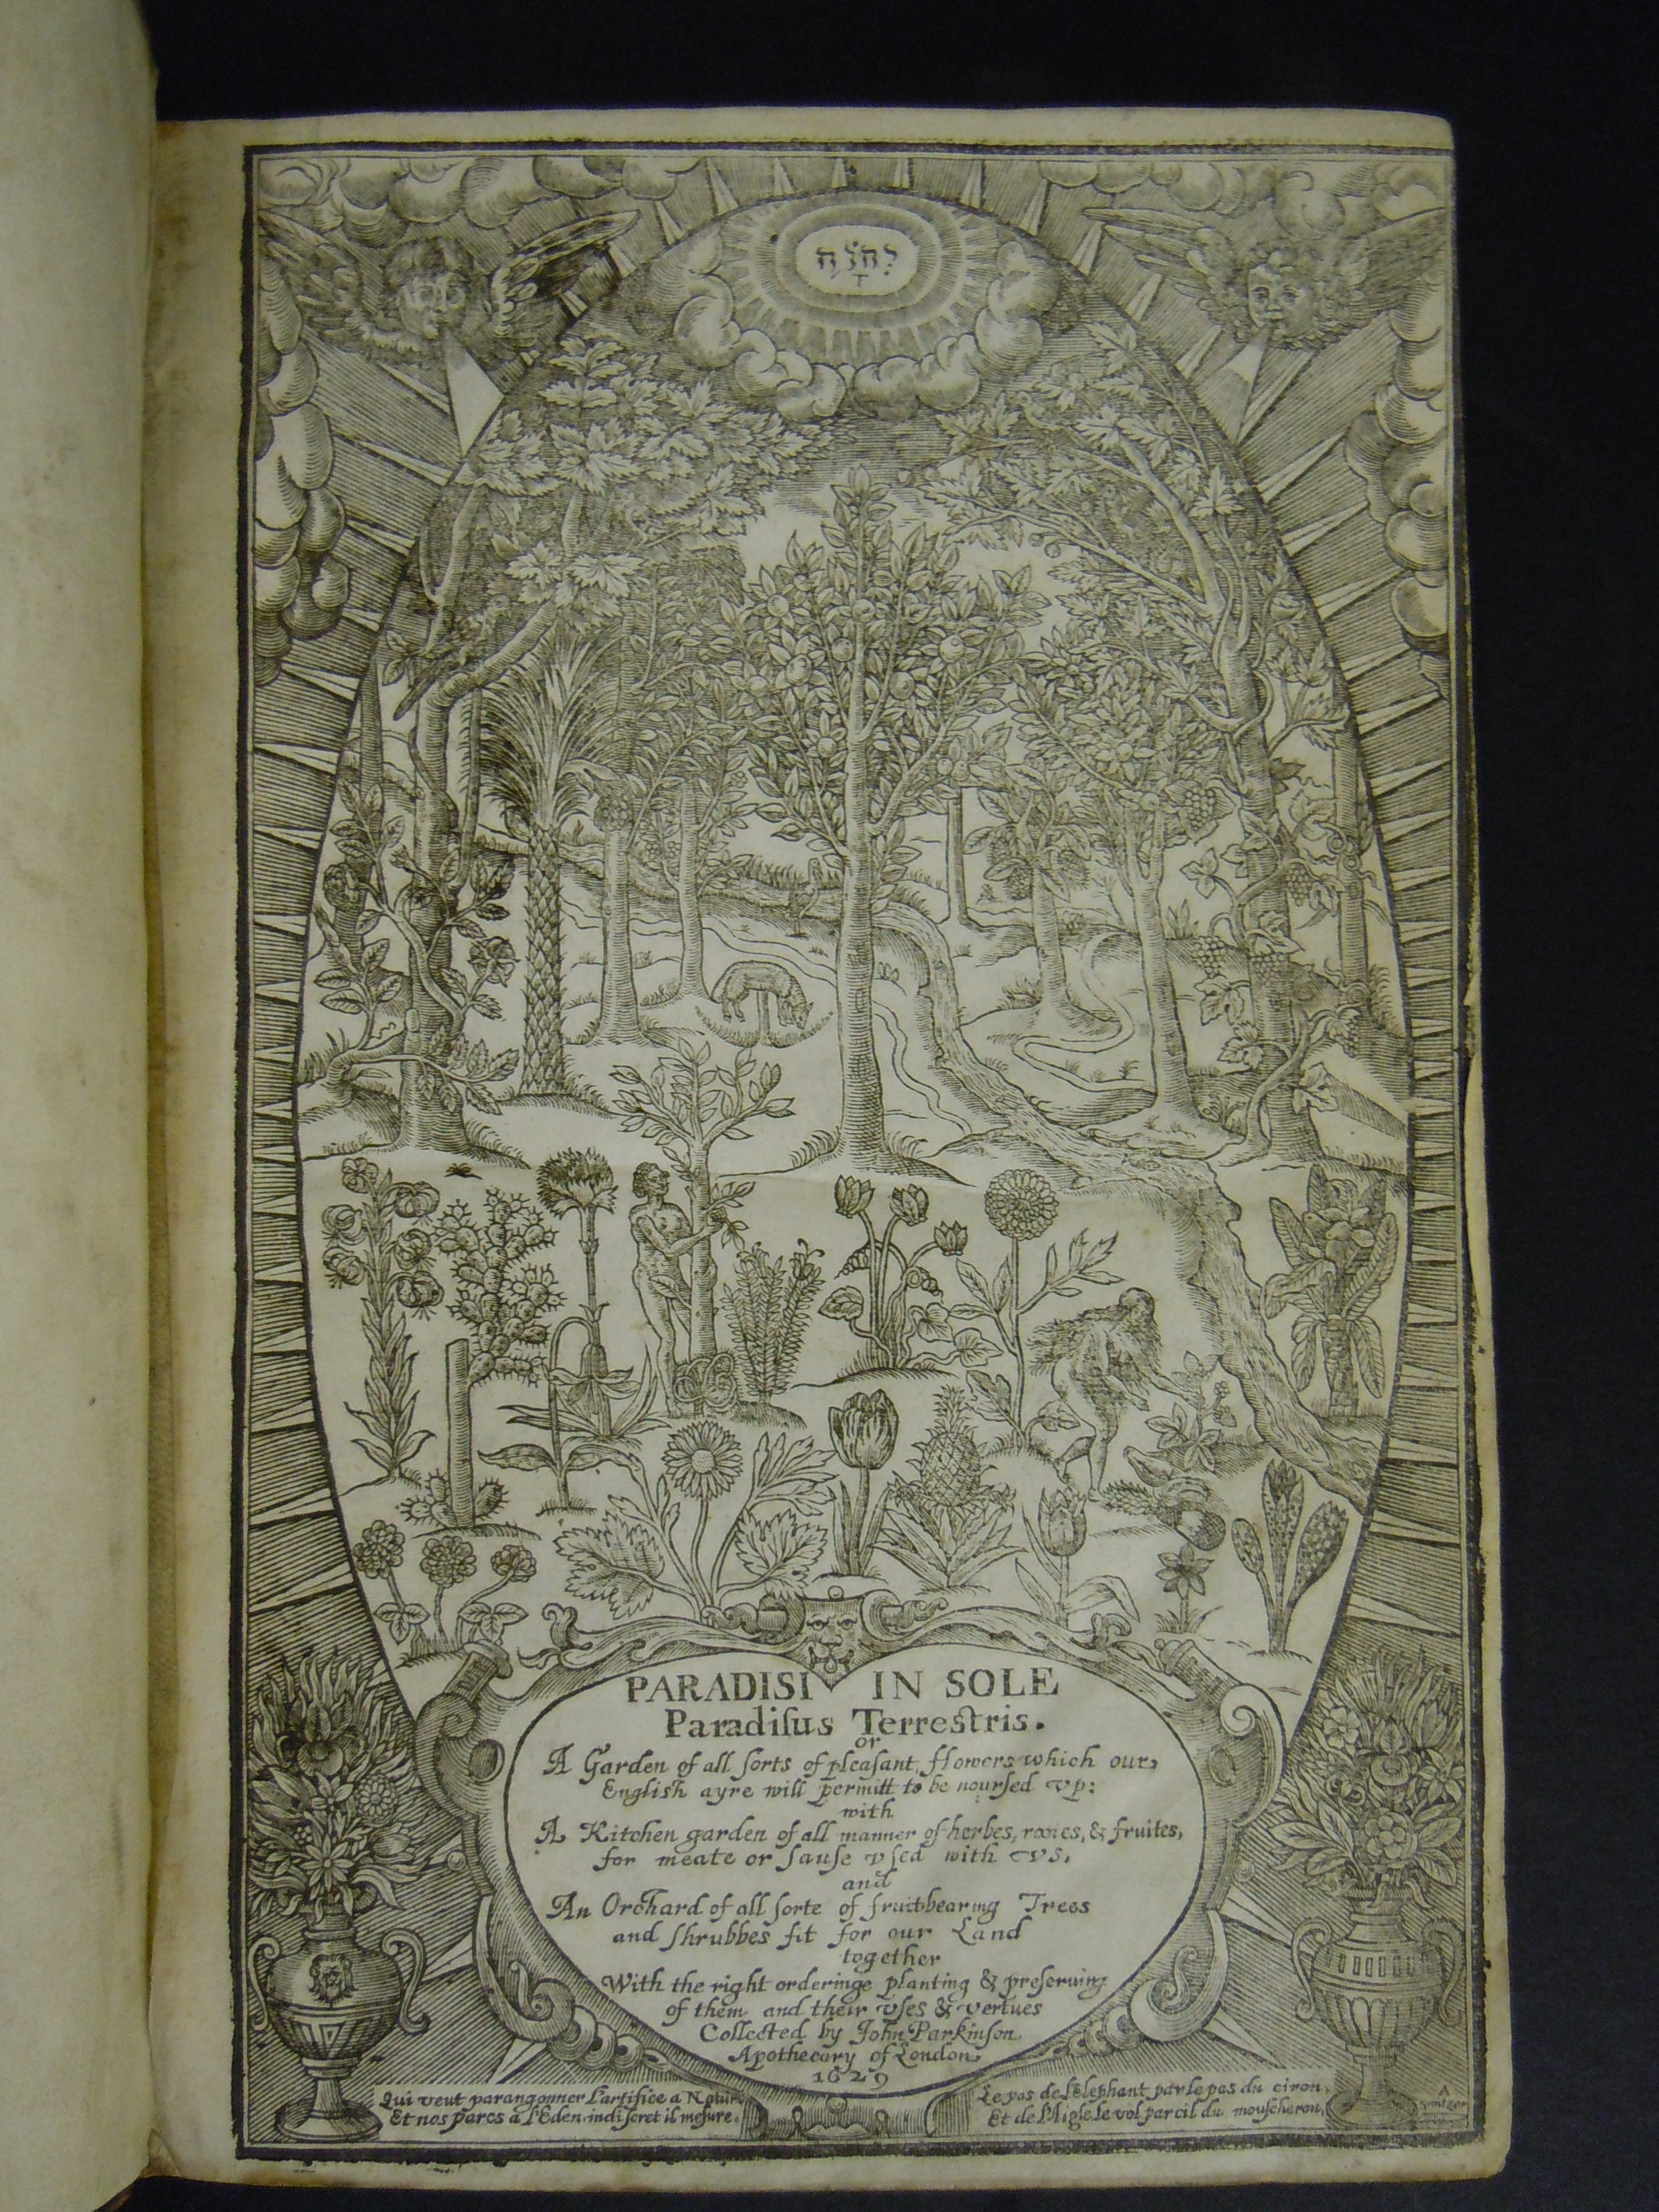 BT1.31.13, title page, John Parkinson鈥檚 Paradisi in sole paradisus terrestris (1629)